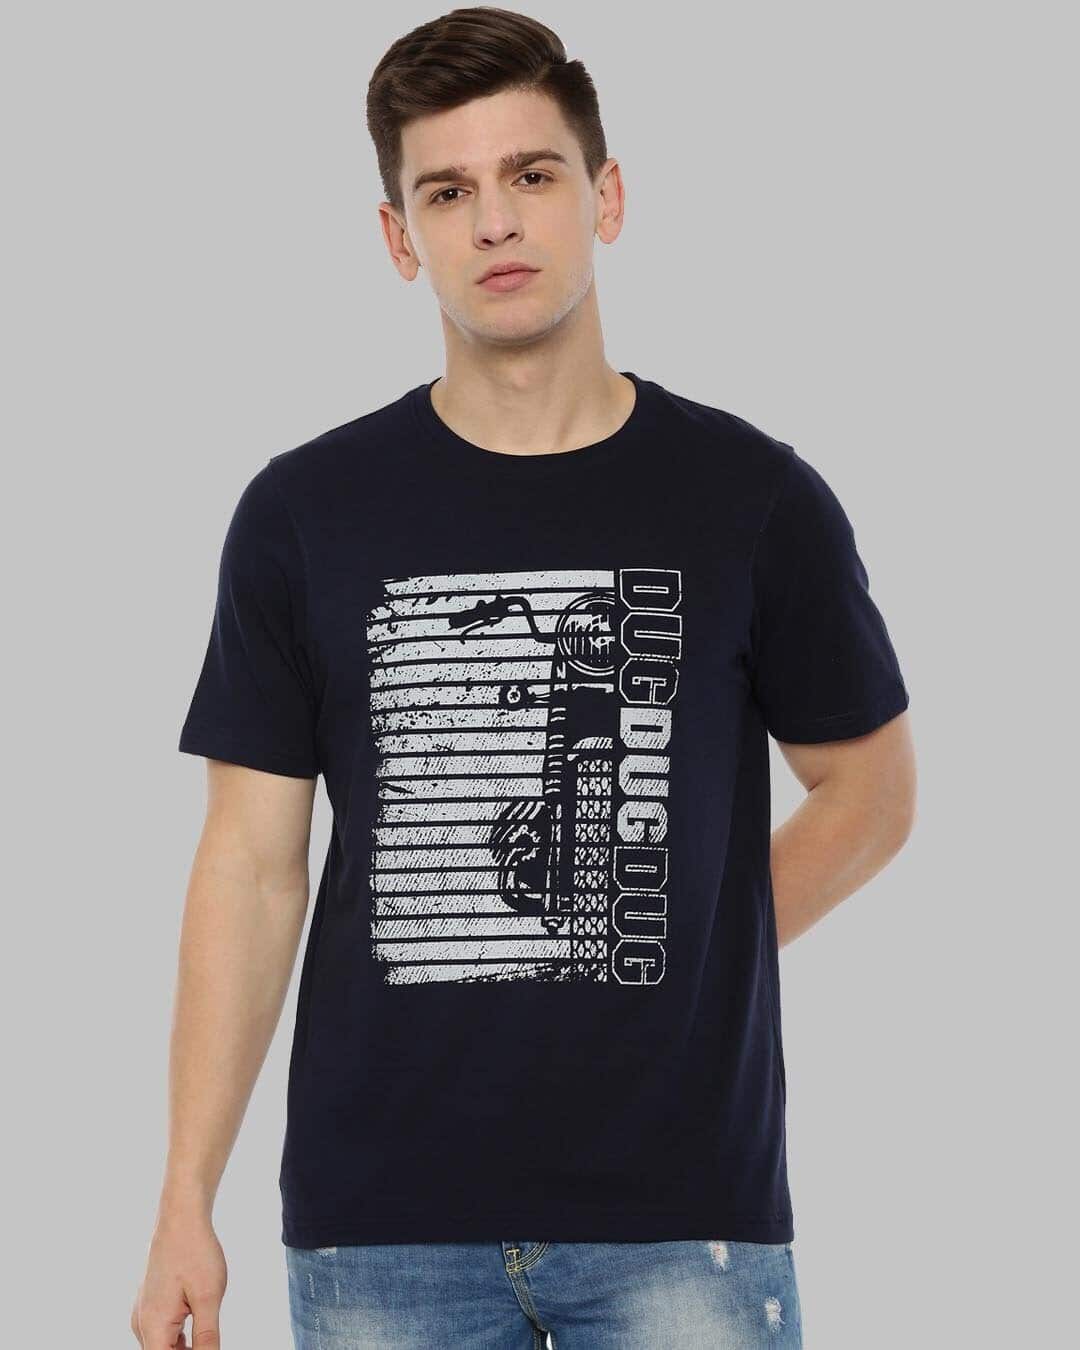 Buy Dug Dug Dug Printed T-Shirt Online at Bewakoof